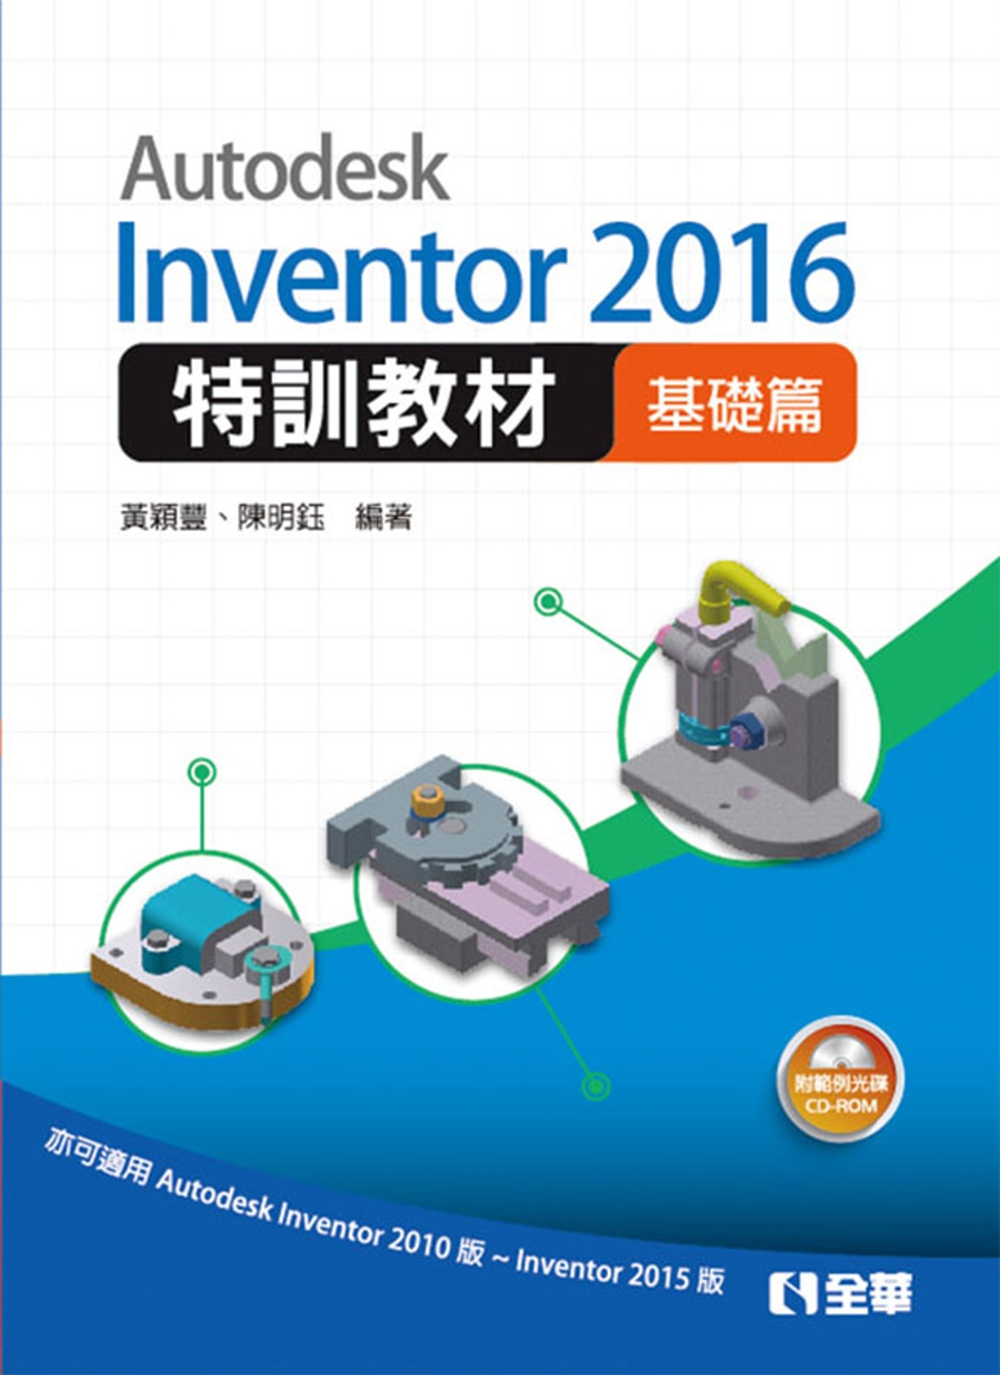 Autodesk Inventor 2016 特訓教材基礎篇...